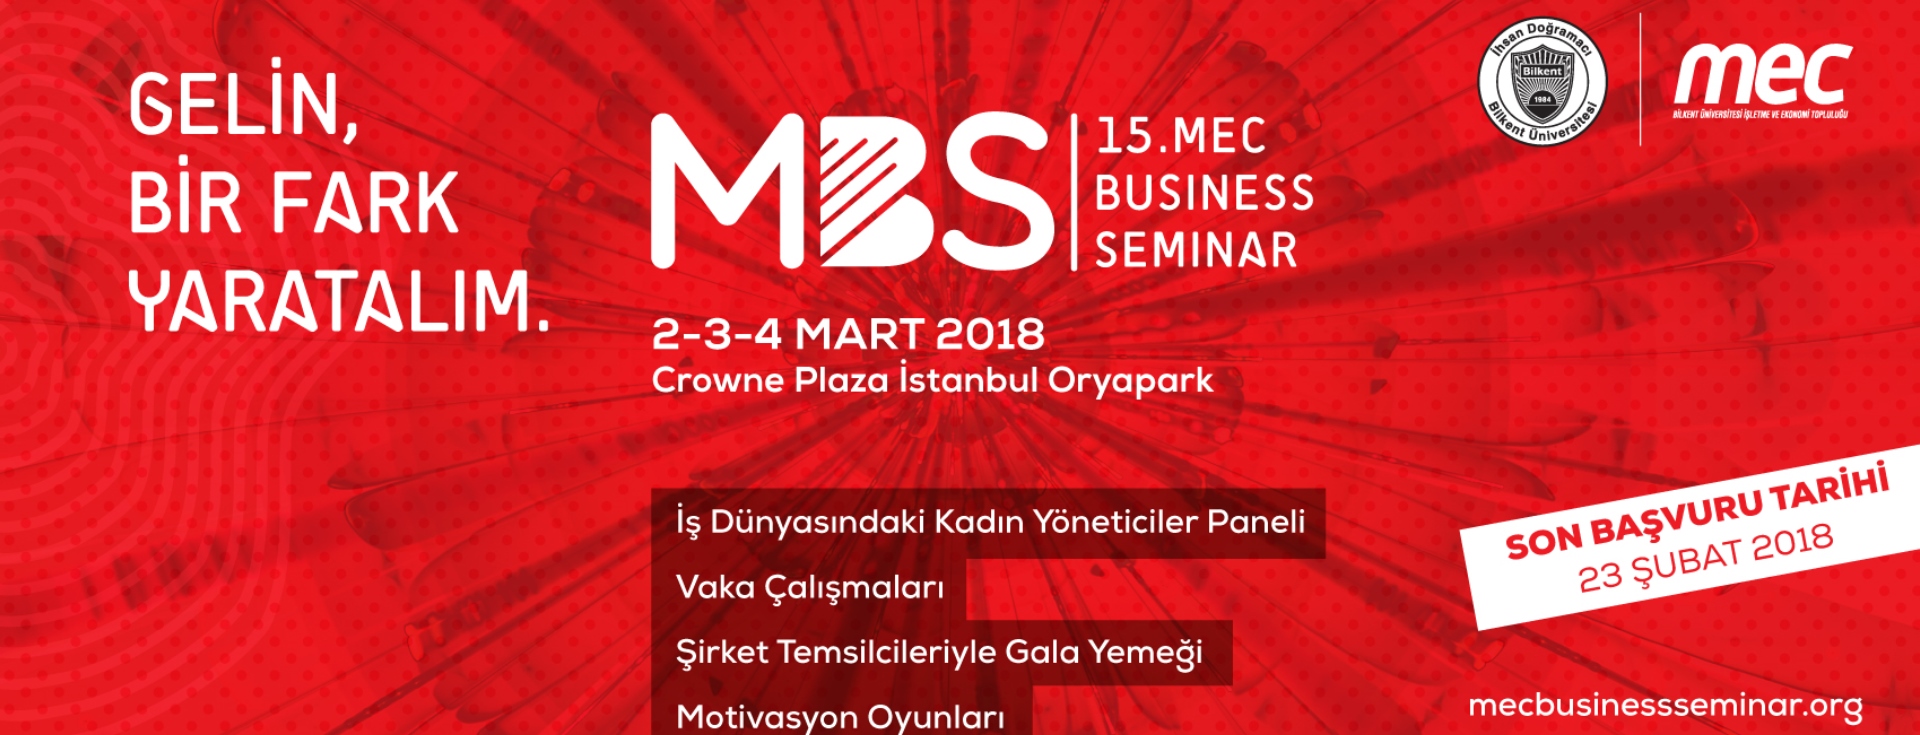 15.MEC Business Seminar 2-3-4 Mart'ta Crowne Plaza İstanbul Oryapark'da